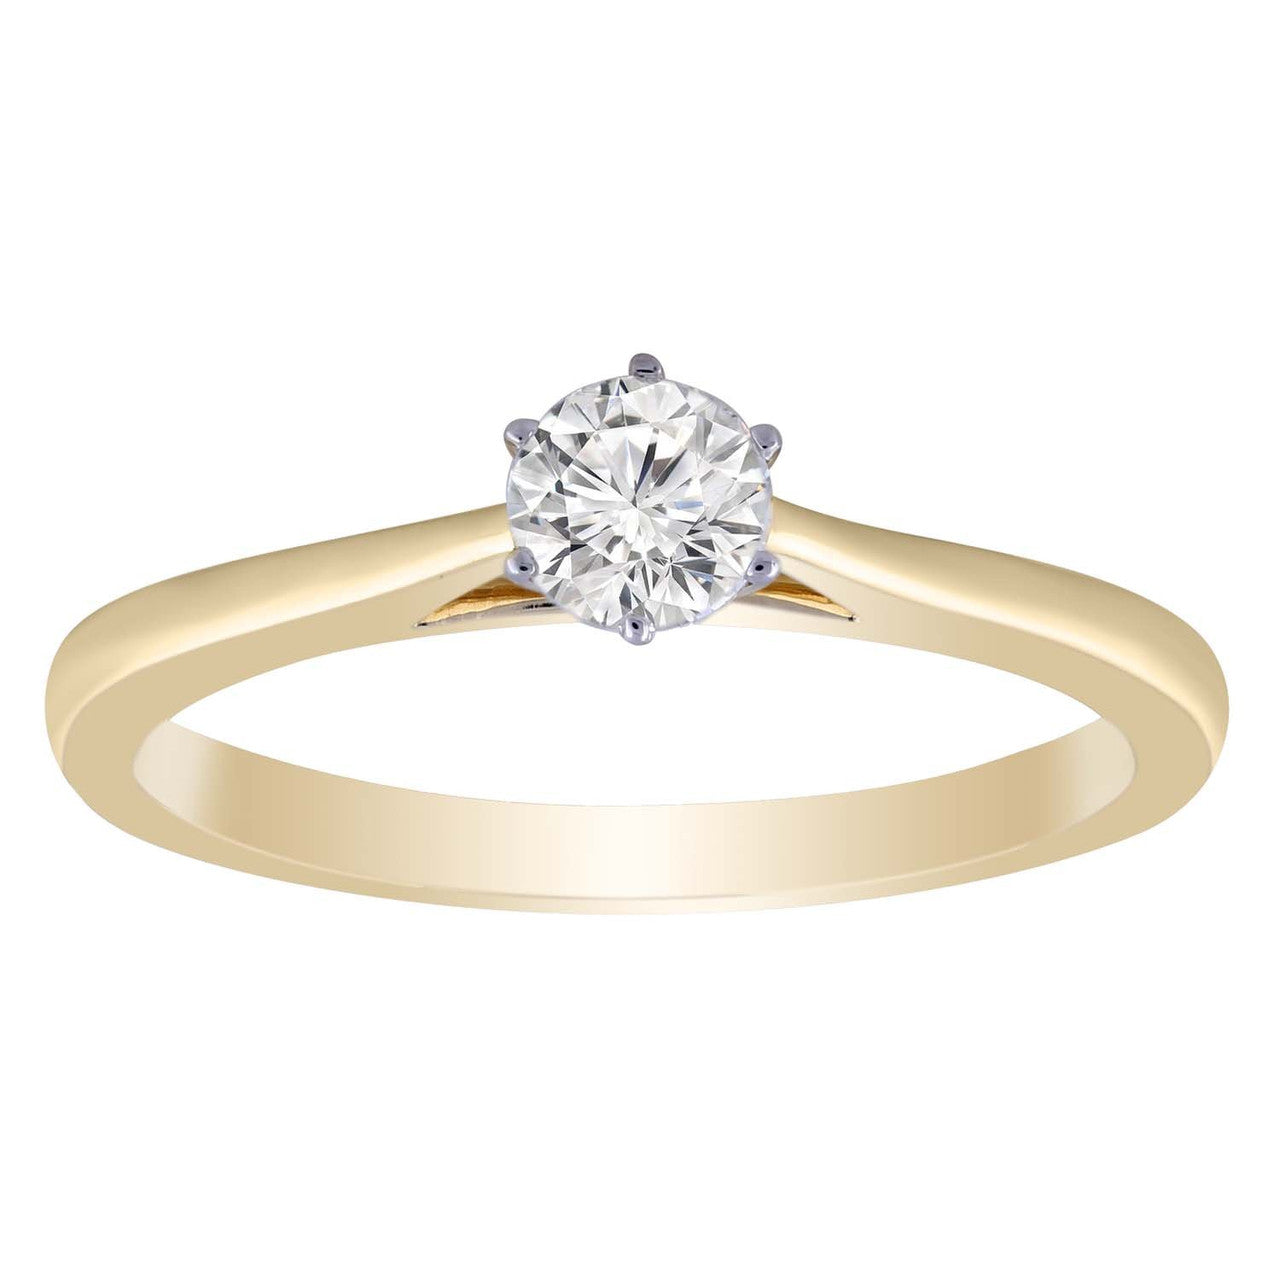 Ice Jewellery Solitaire Ring with 0.33ct Diamond in 9K Yellow Gold -  IGR-38249-033-Y | Ice Jewellery Australia